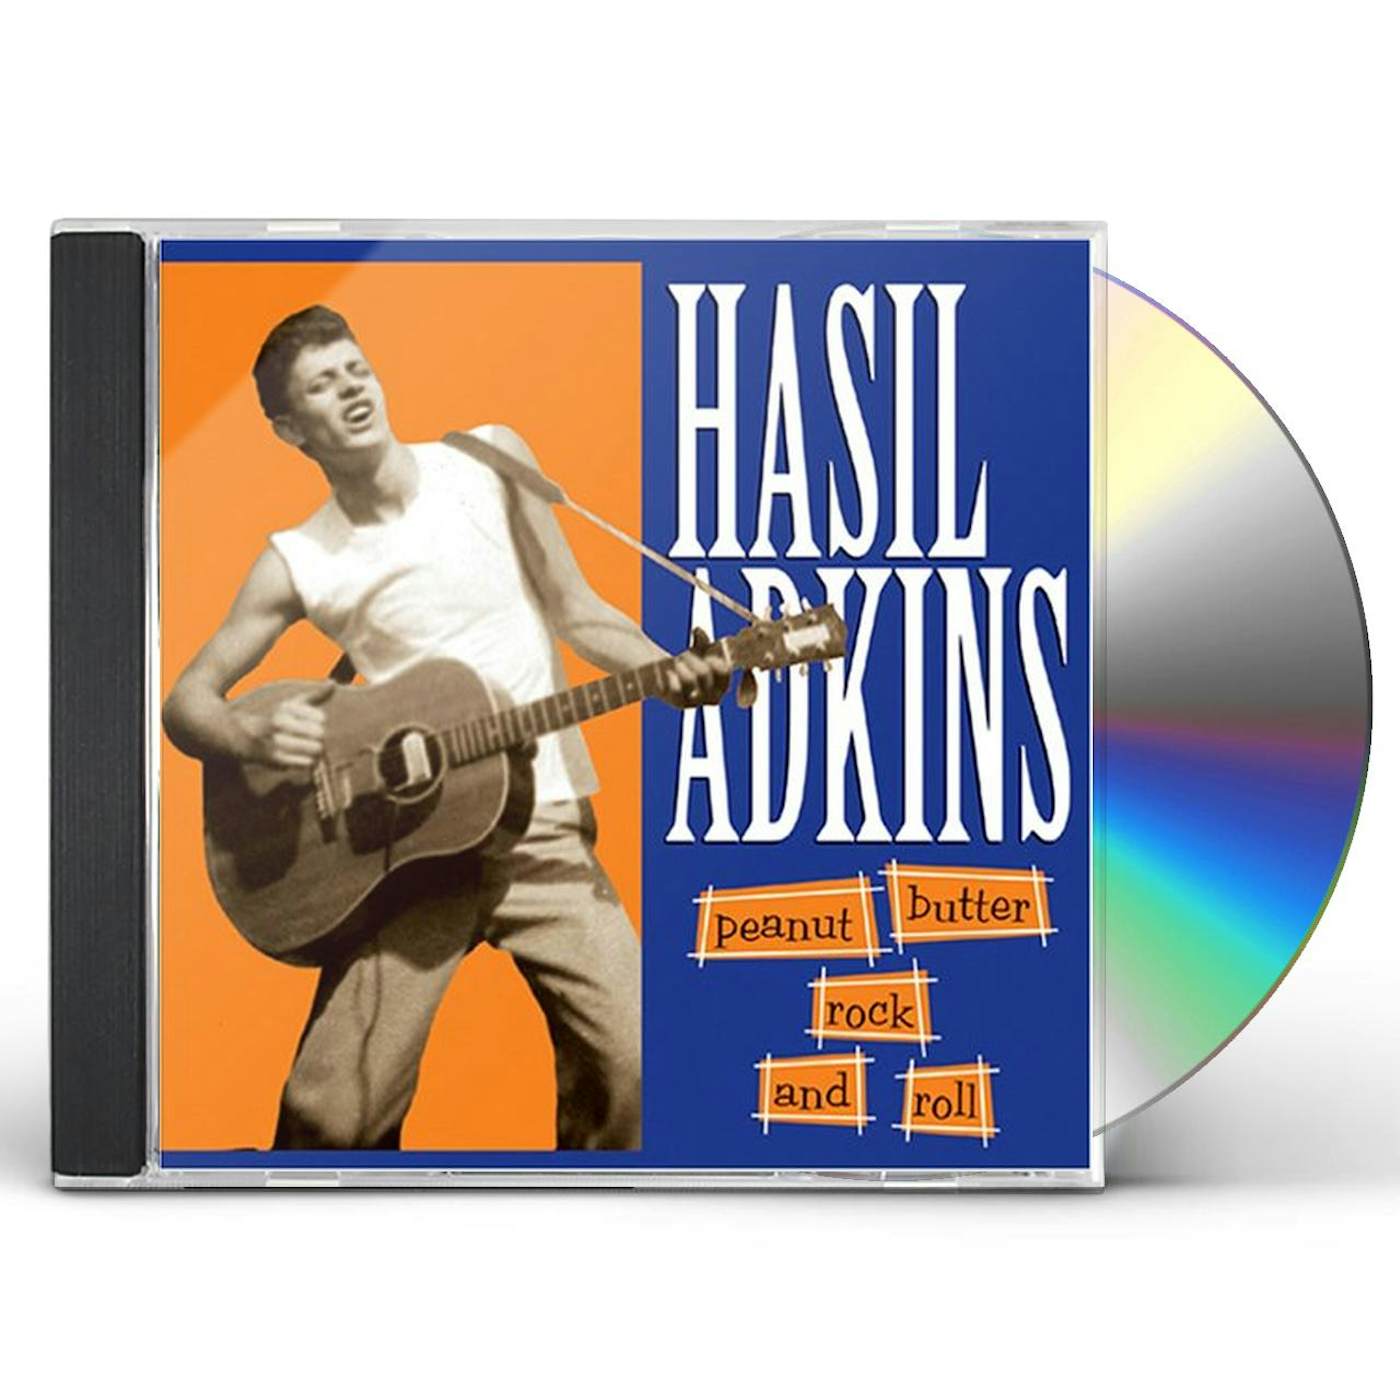 Hasil Adkins PEANUT BUTTER ROCK N ROLL CD